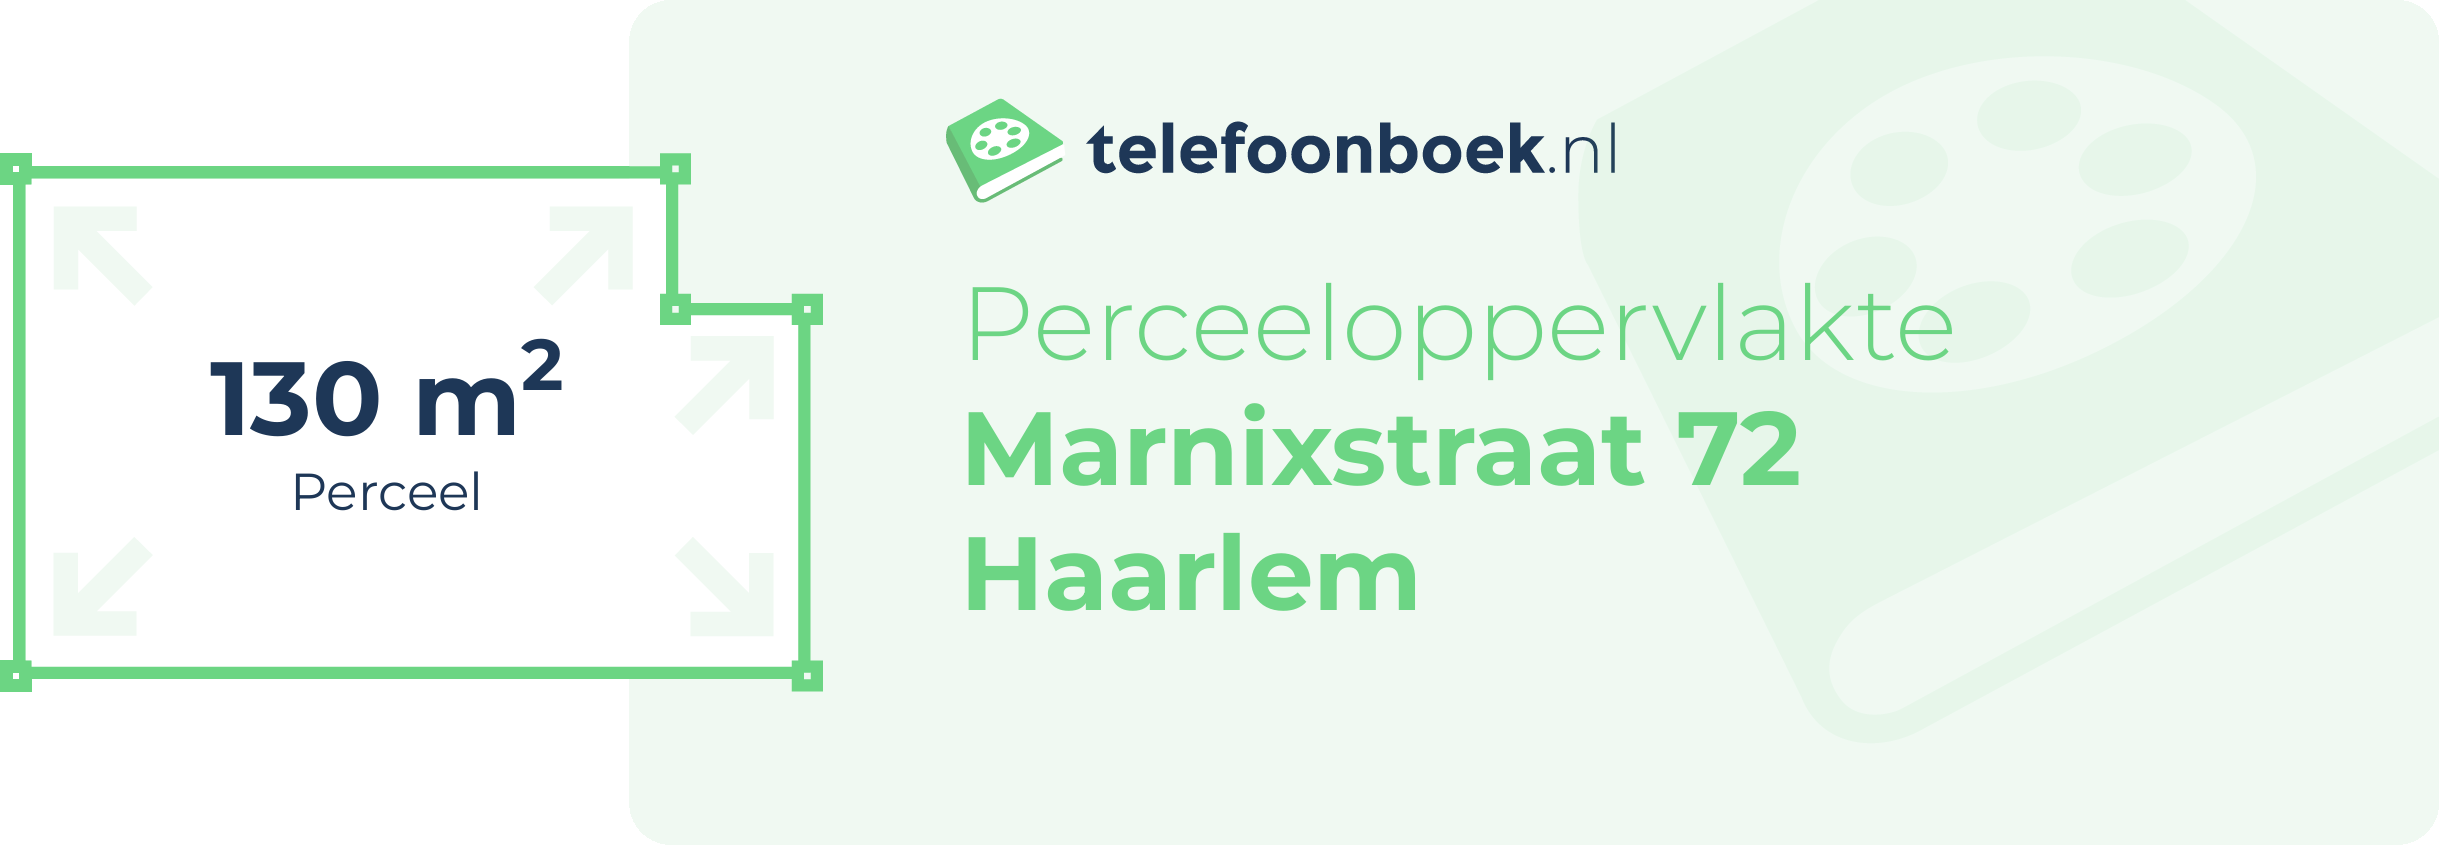 Perceeloppervlakte Marnixstraat 72 Haarlem